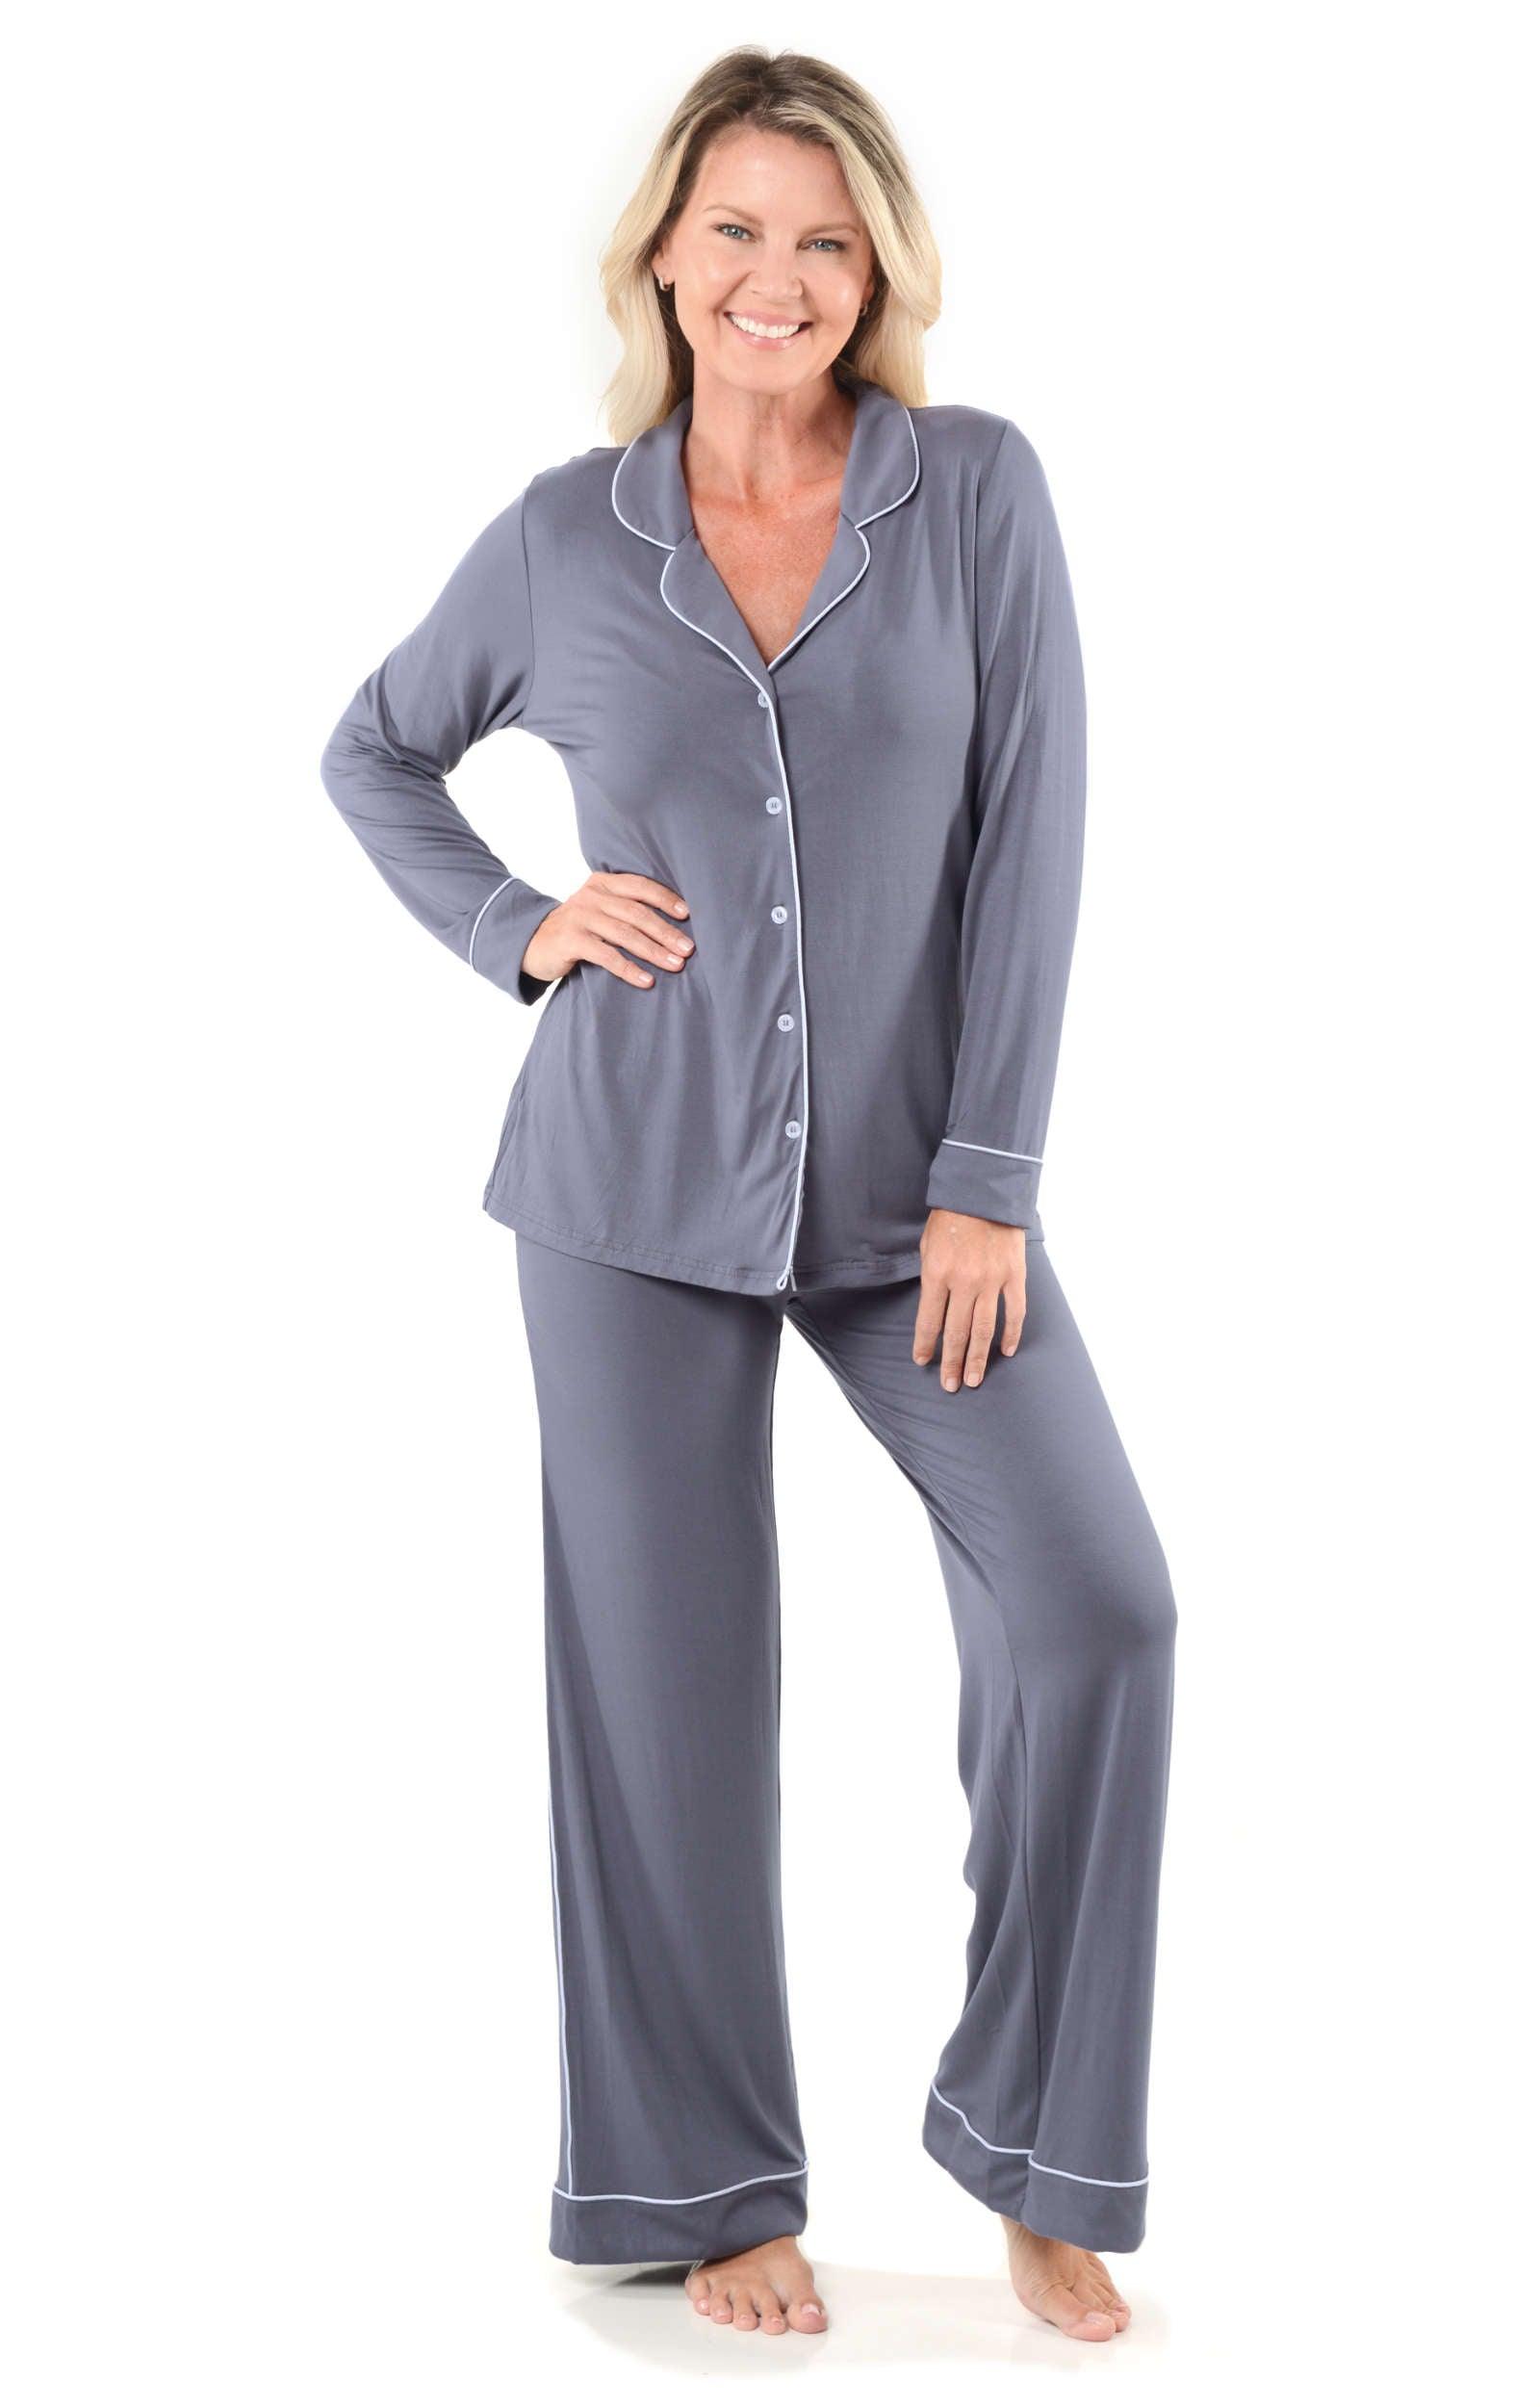 Women's Long Sleeve Top and Pajama Pant Set